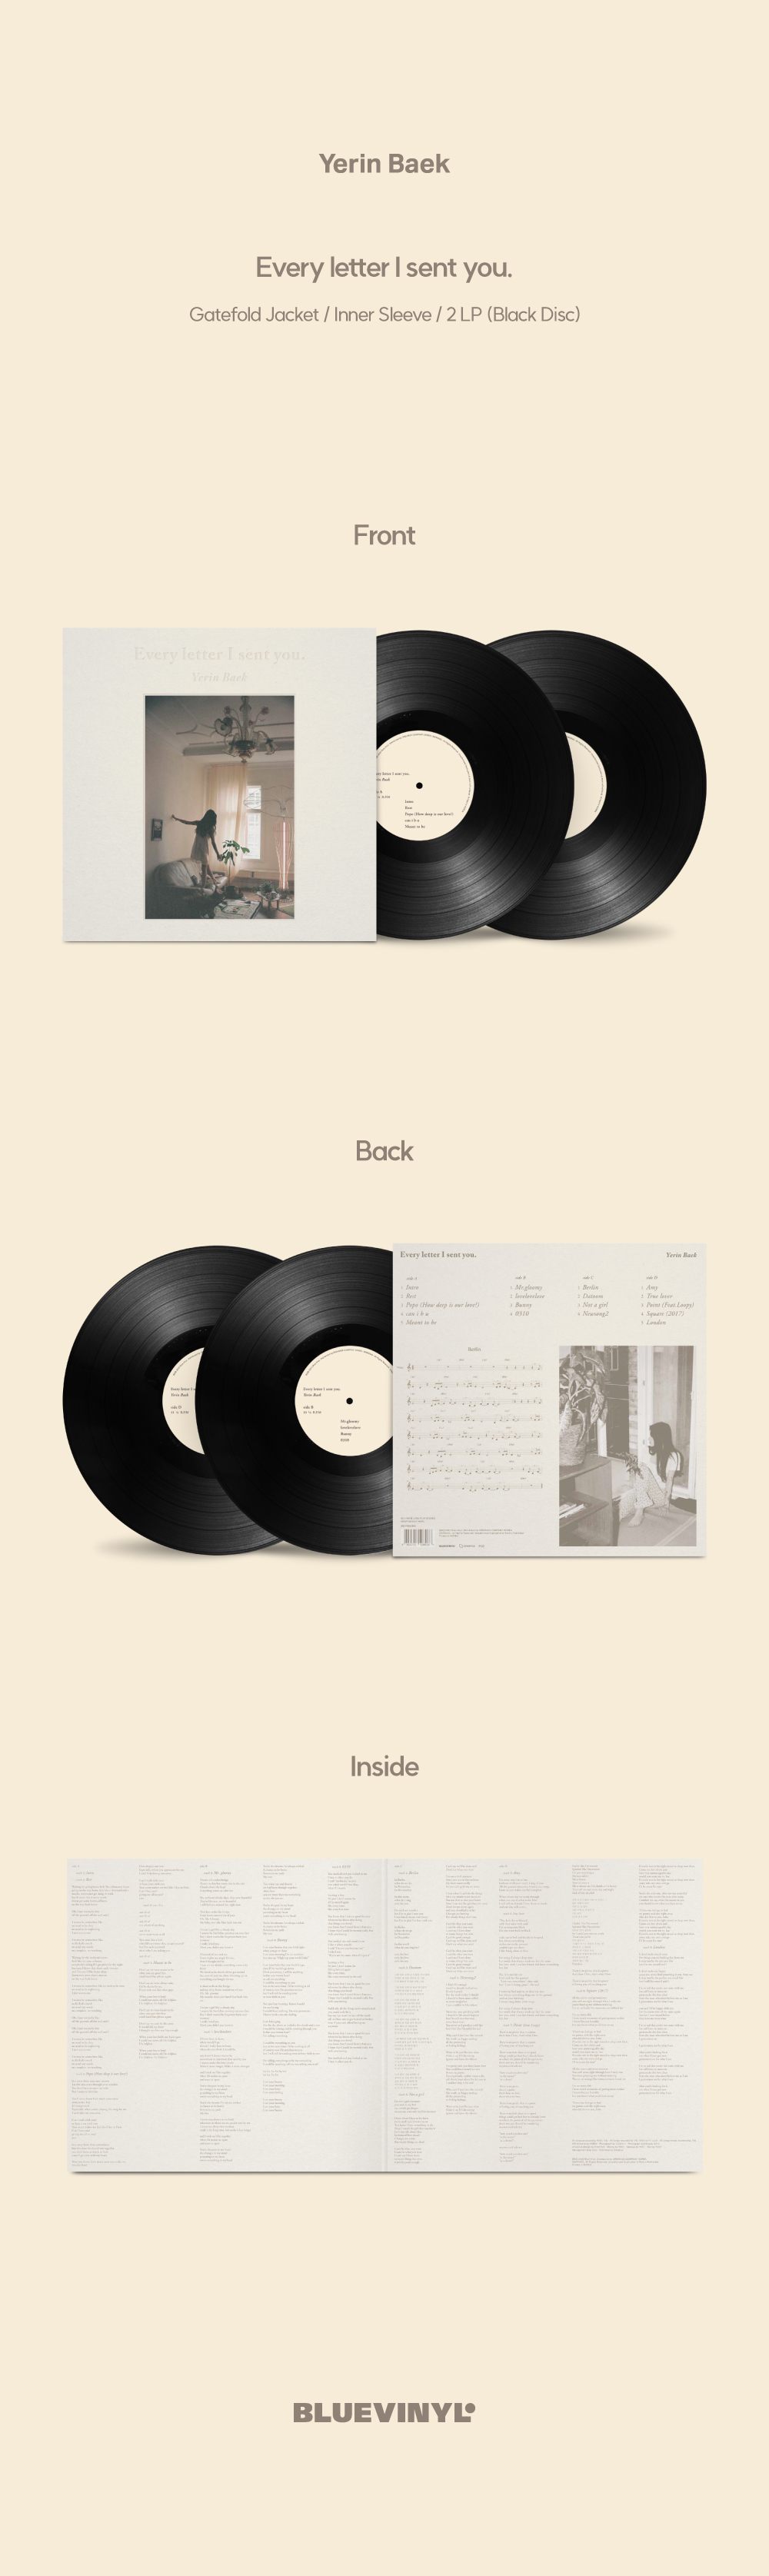 Yerin Baek 1st Album [Every letter I sent you.] Standard Edition 